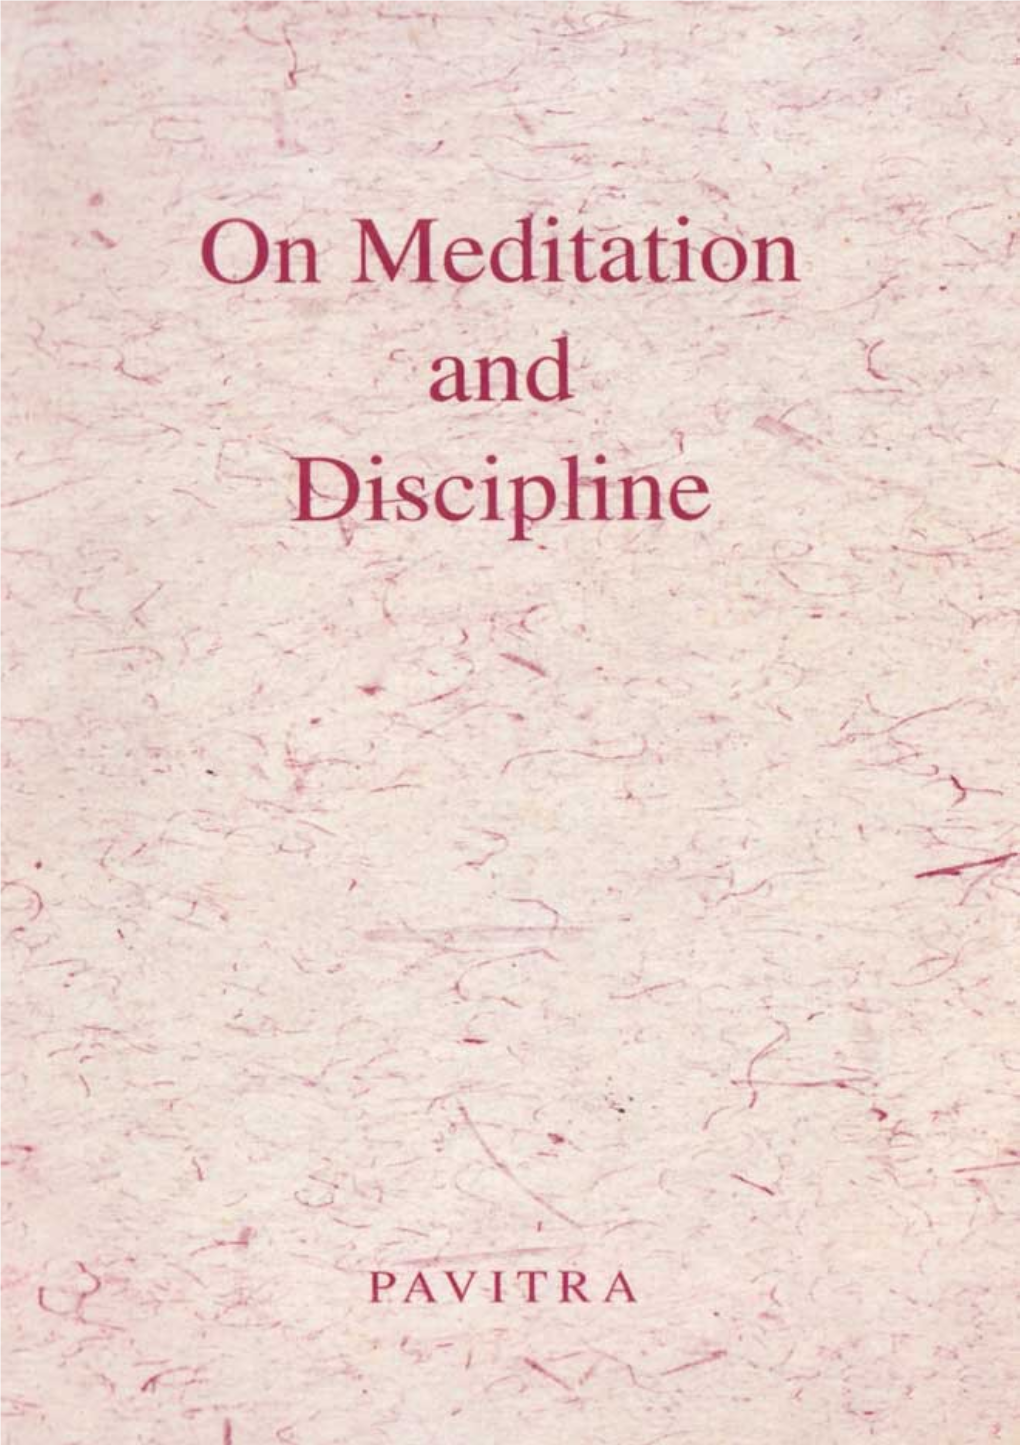 On Meditation and Discipline